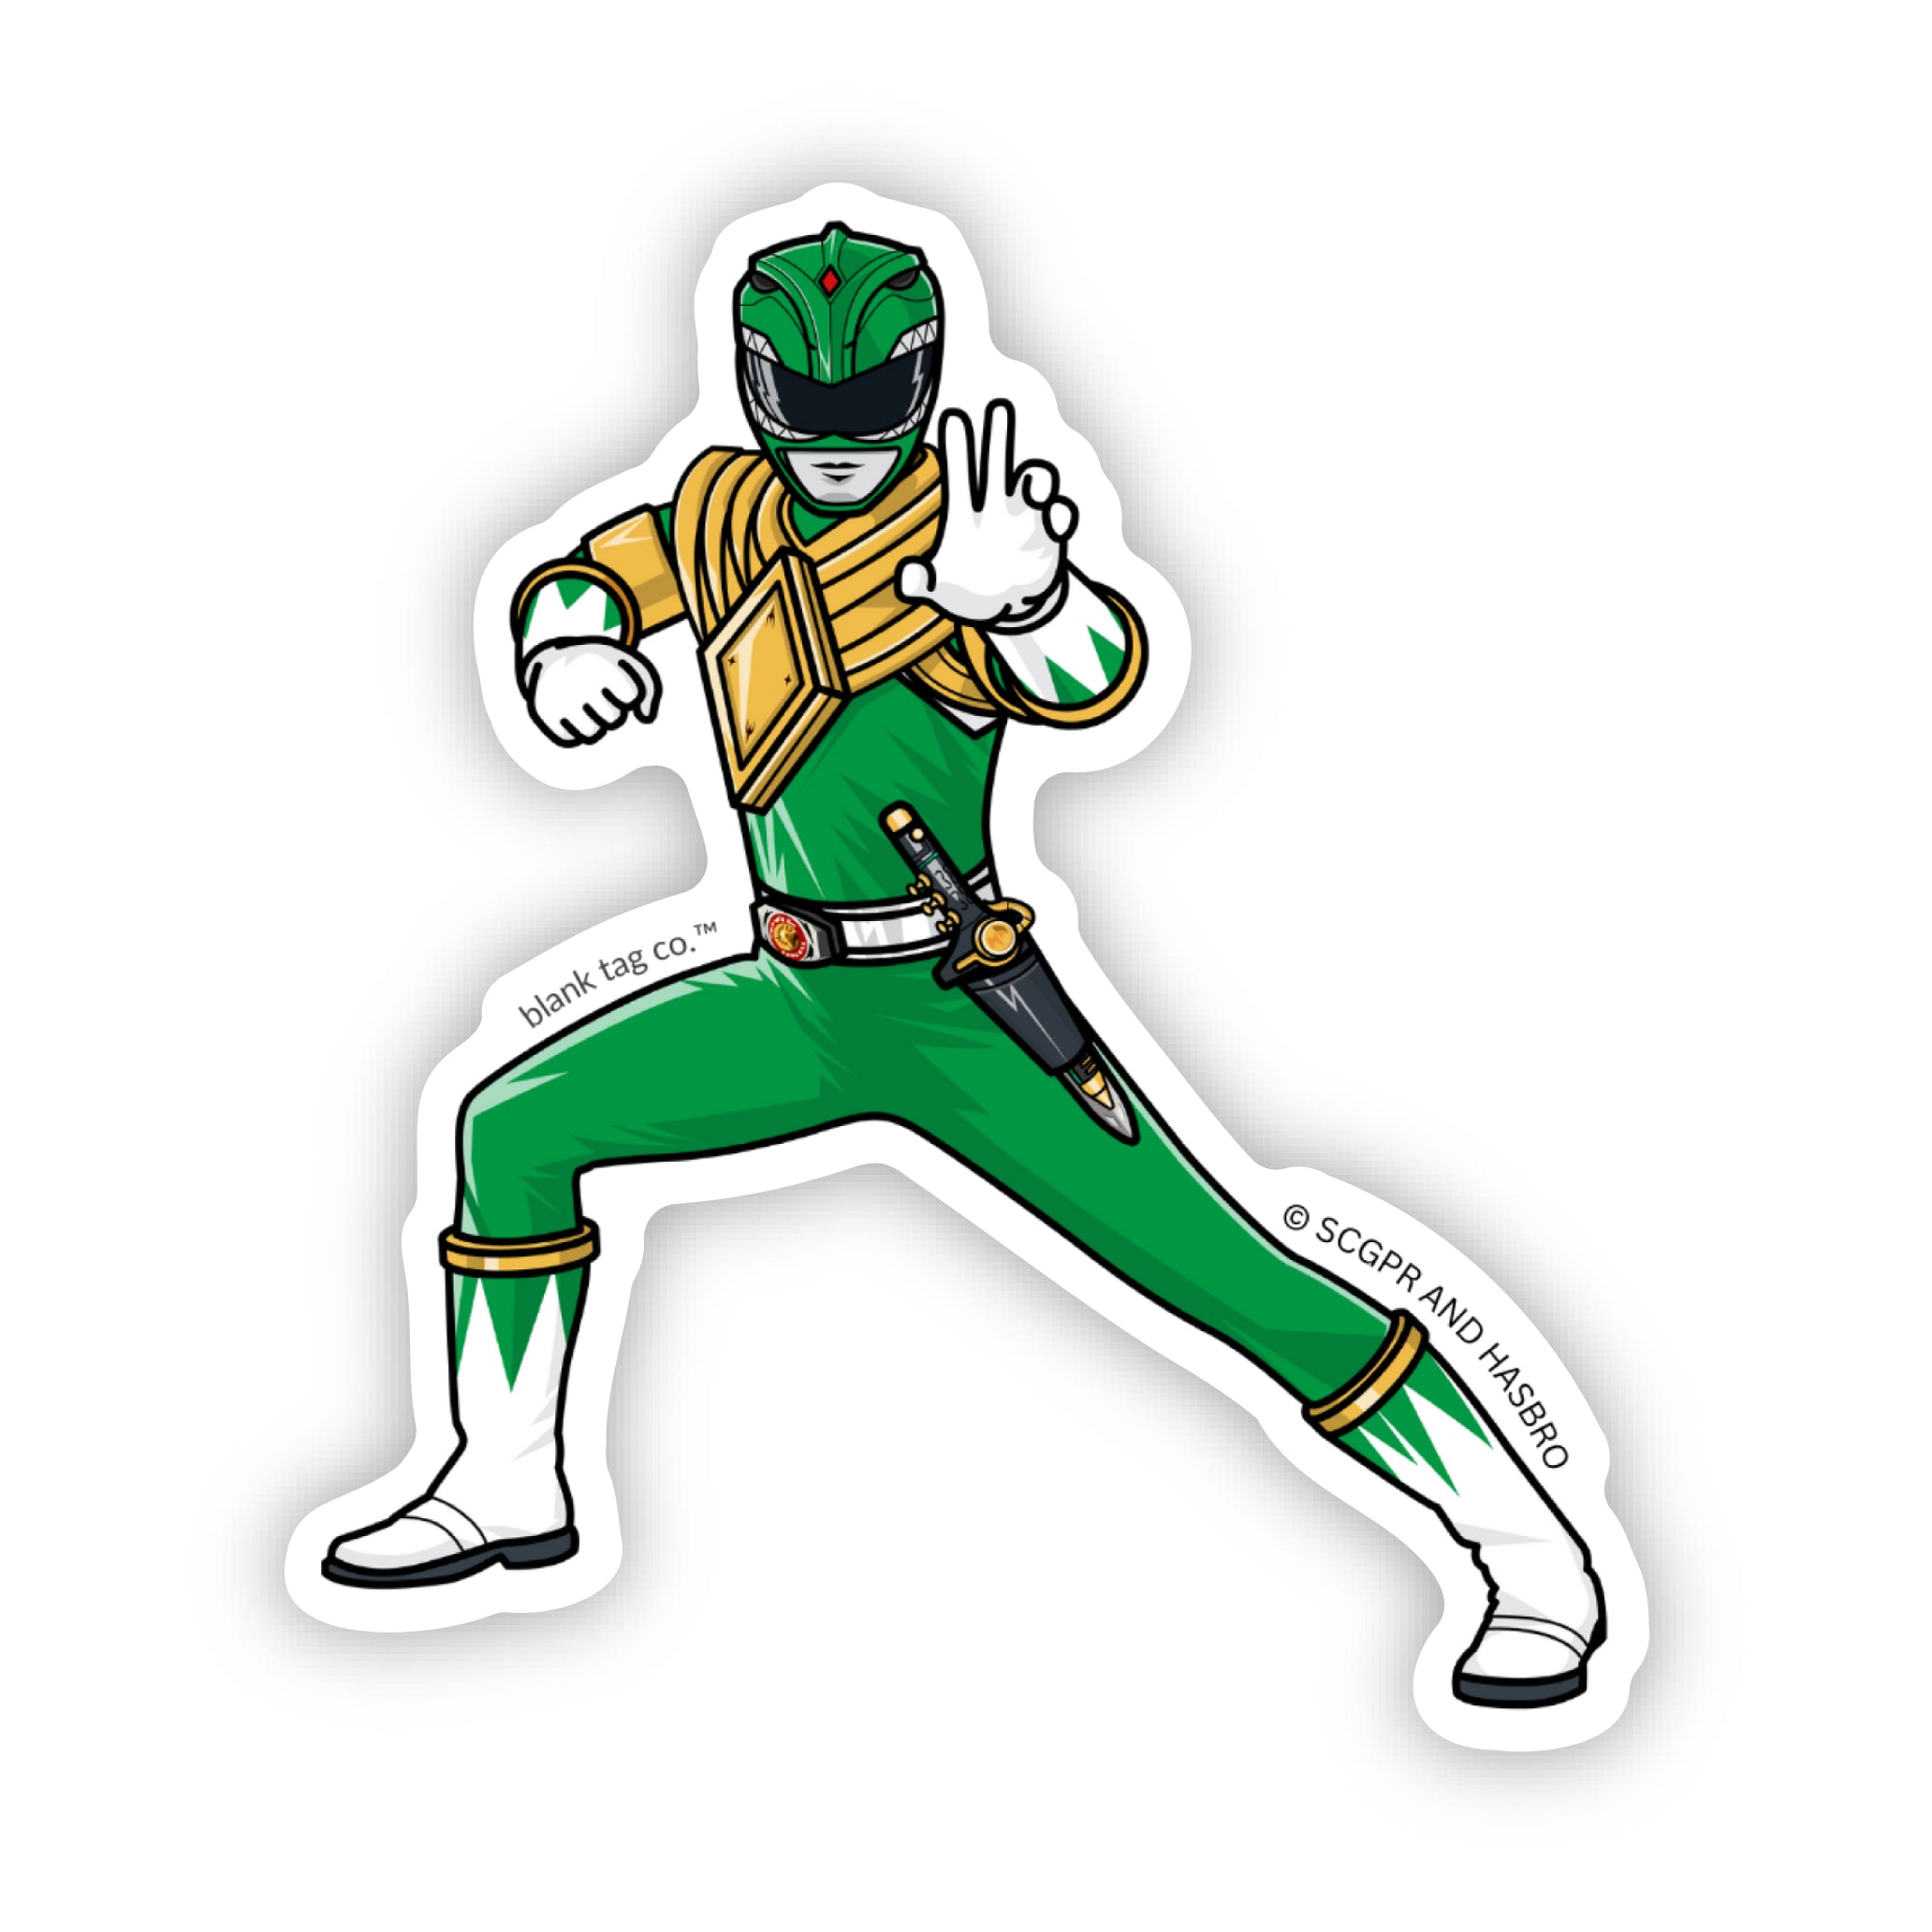 The Green Ranger Sticker